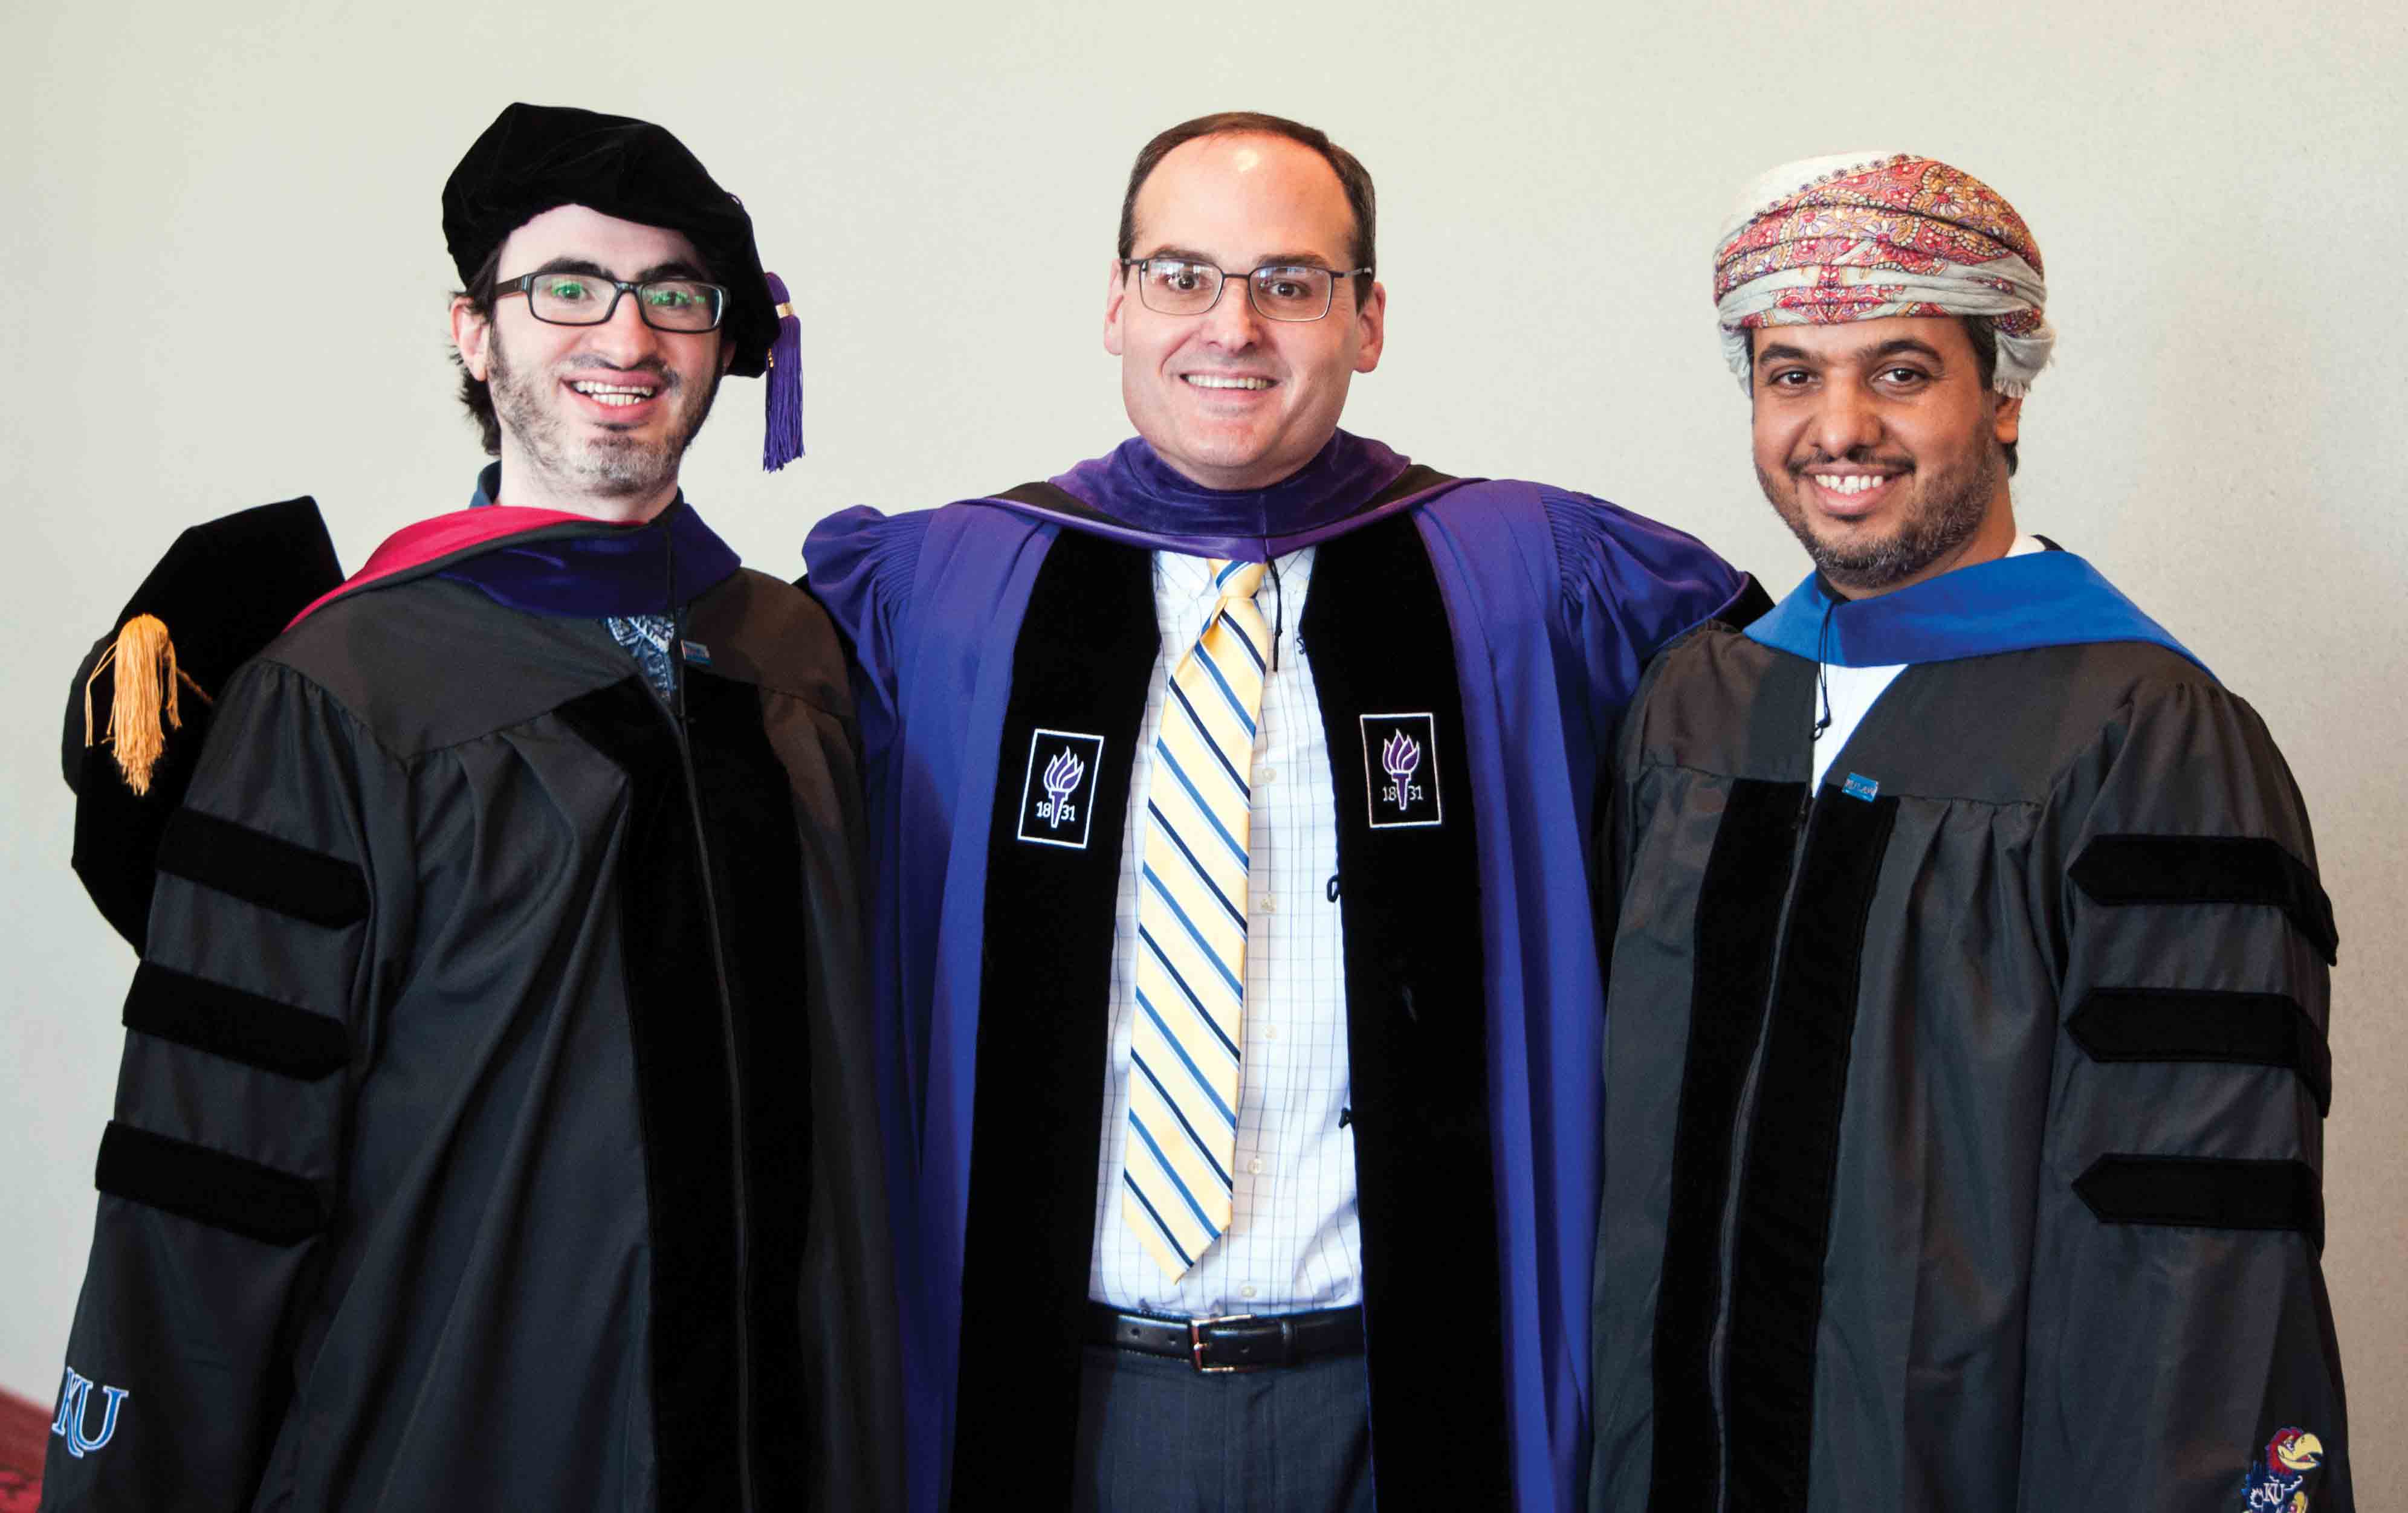 Dean Stephen Mazza, center, with two School of Law alumni